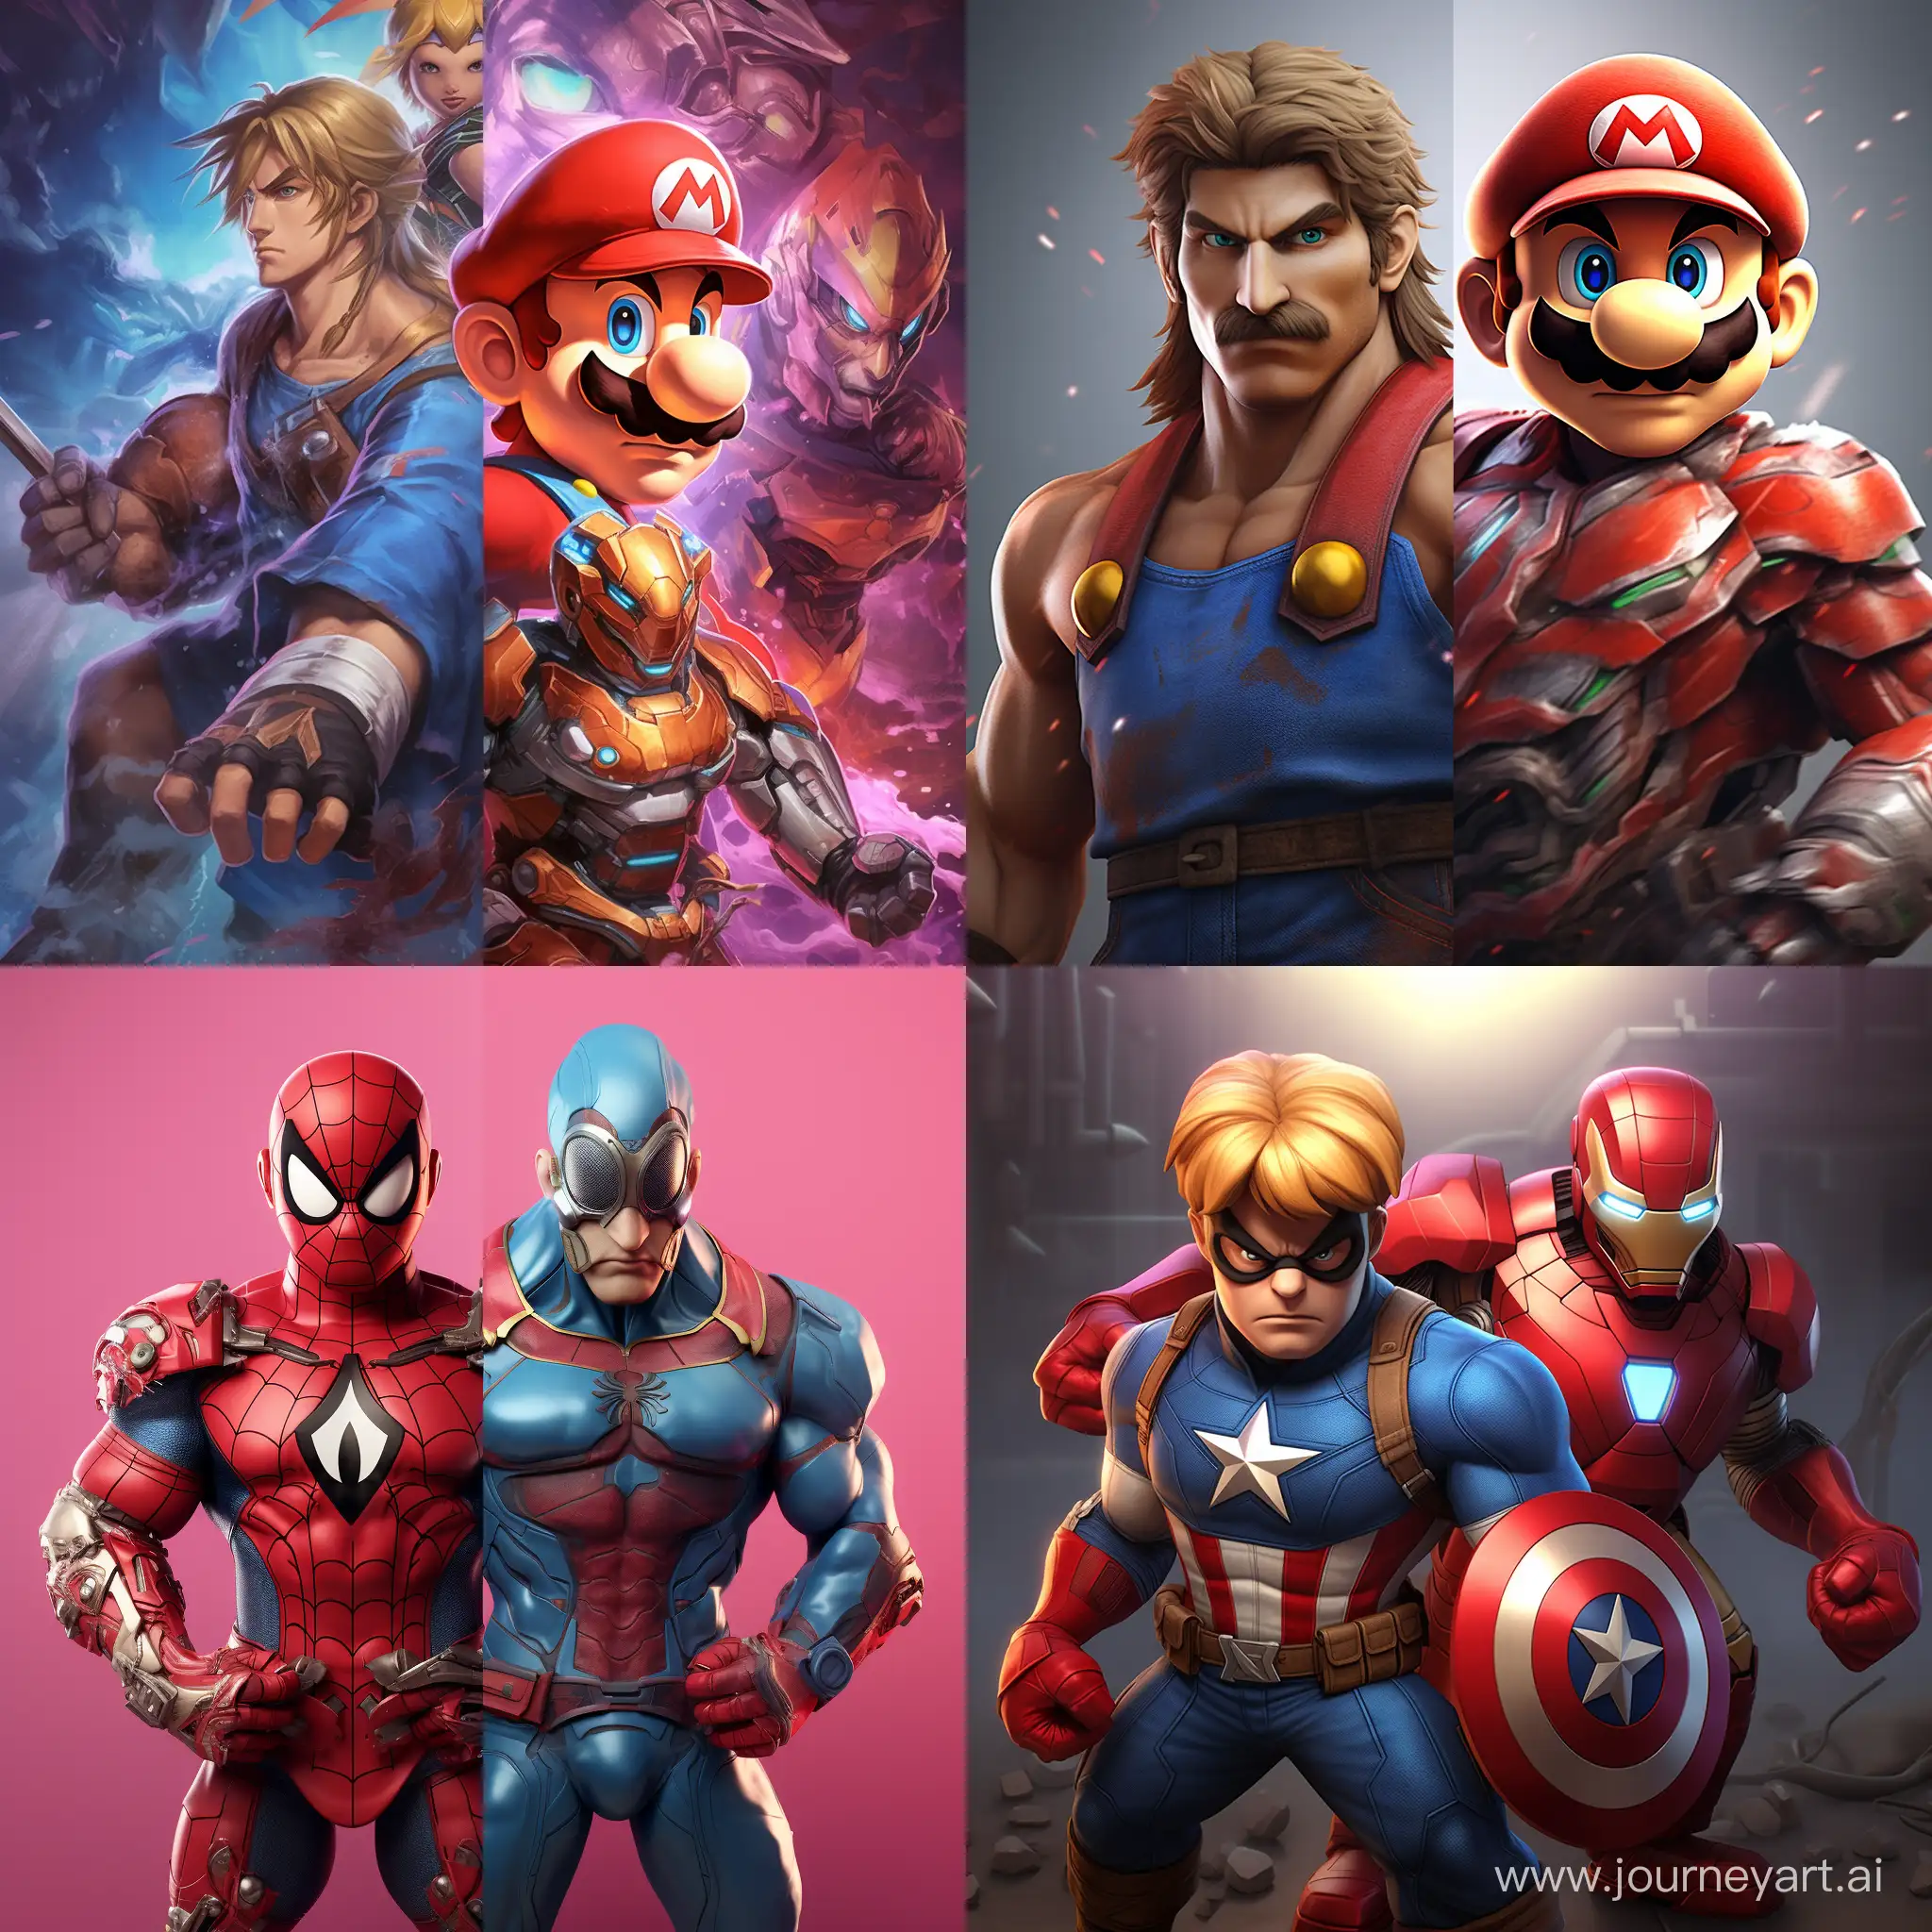 Nintendo characters vs marvel characters